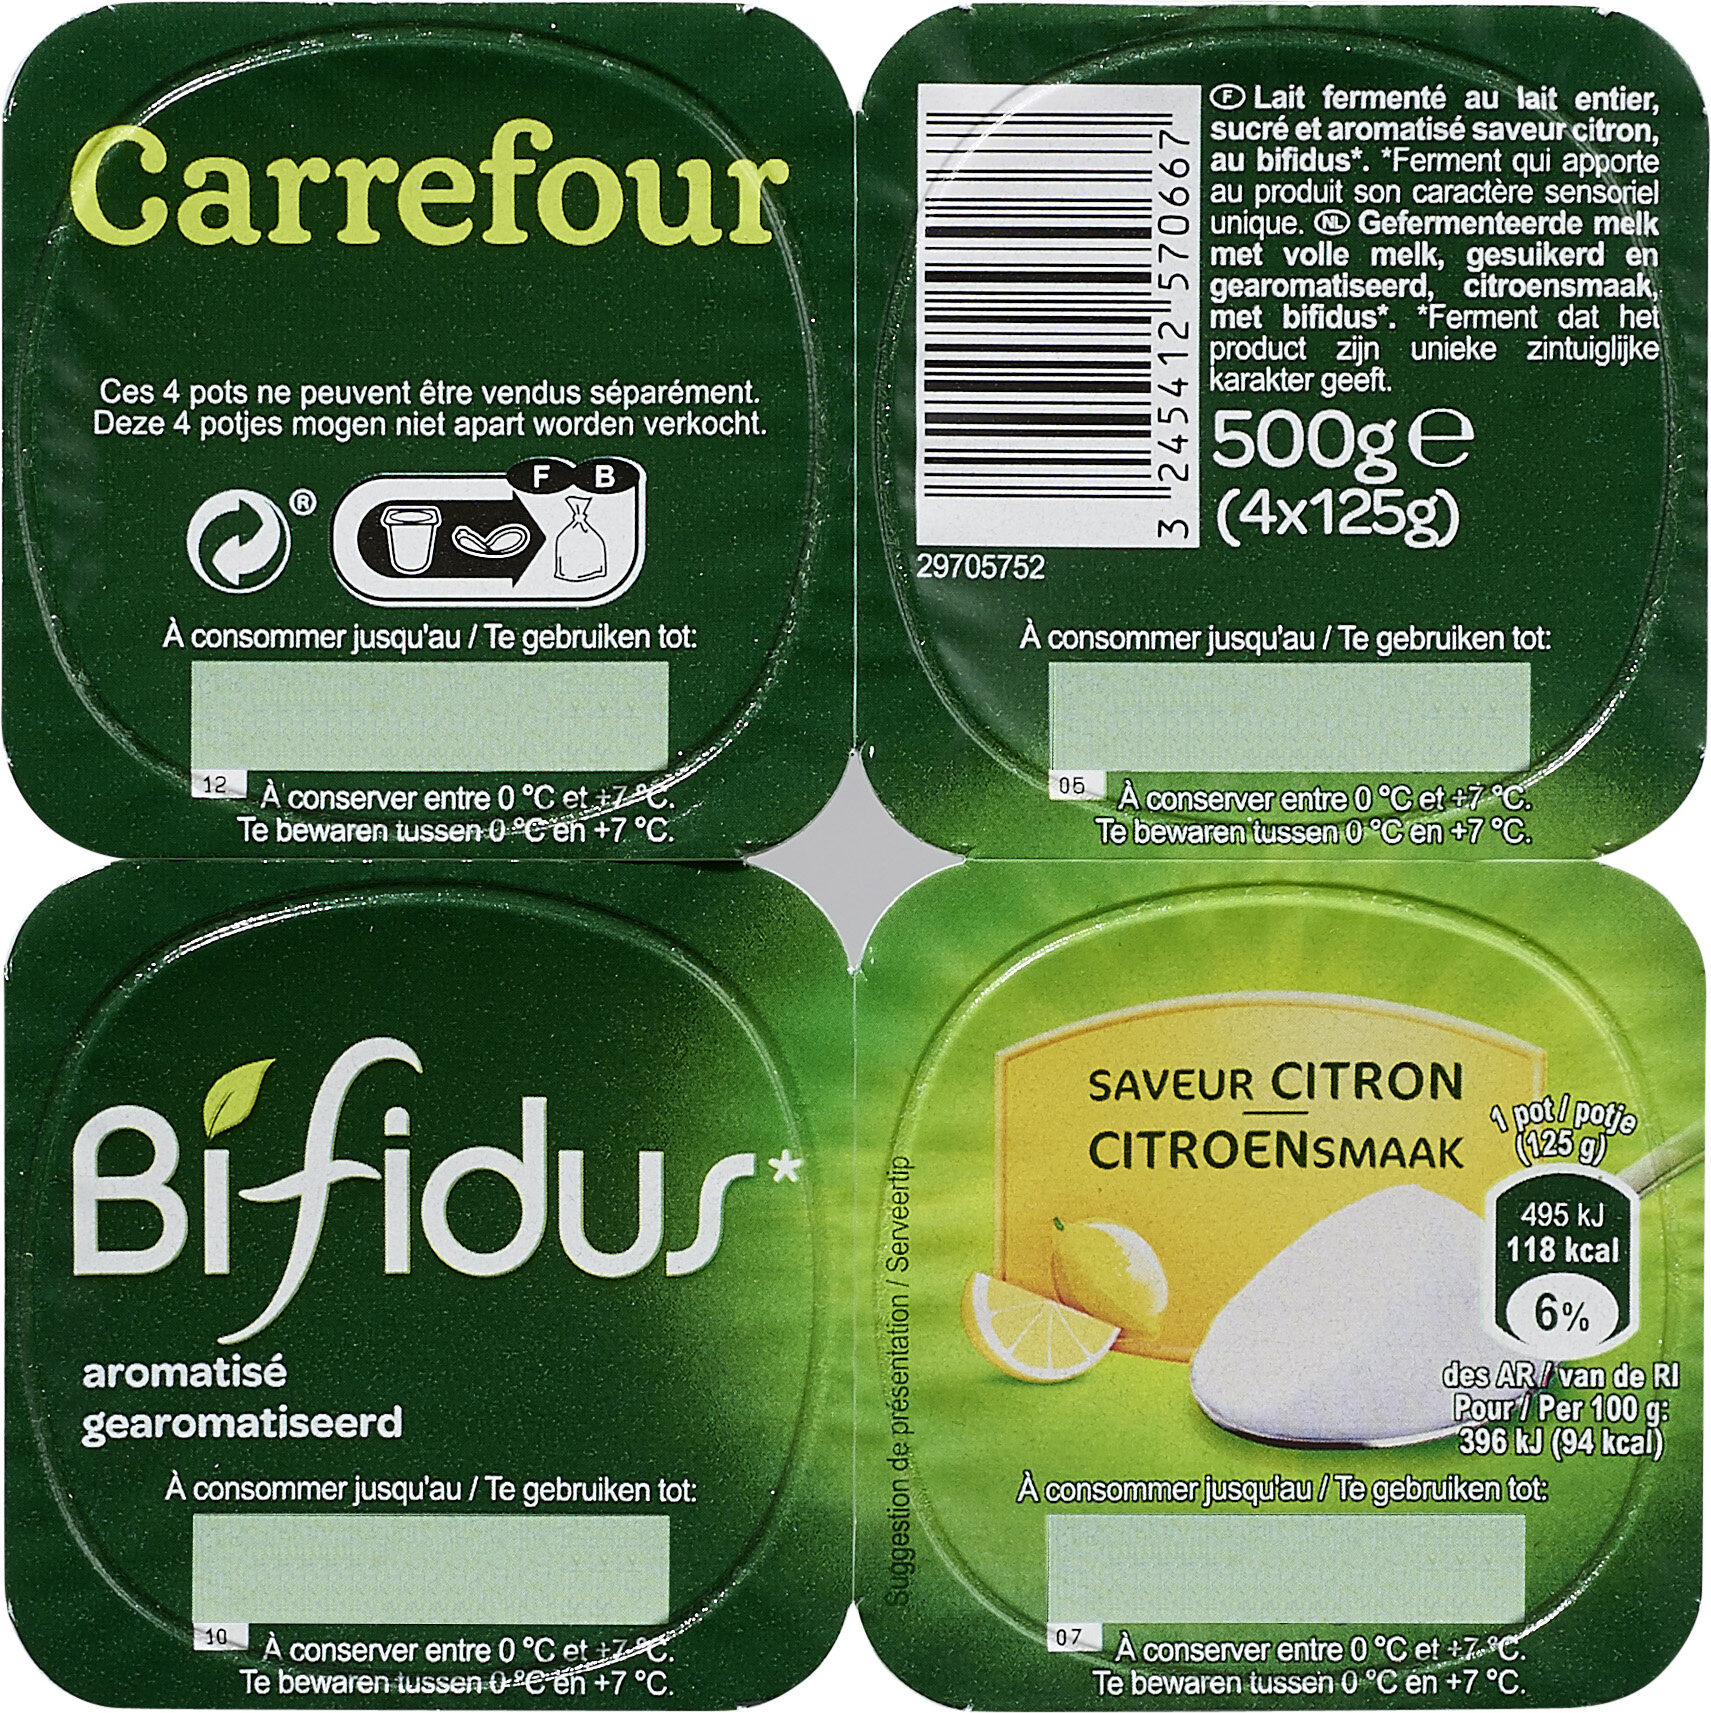 Bifidus* saveur citron - Product - fr